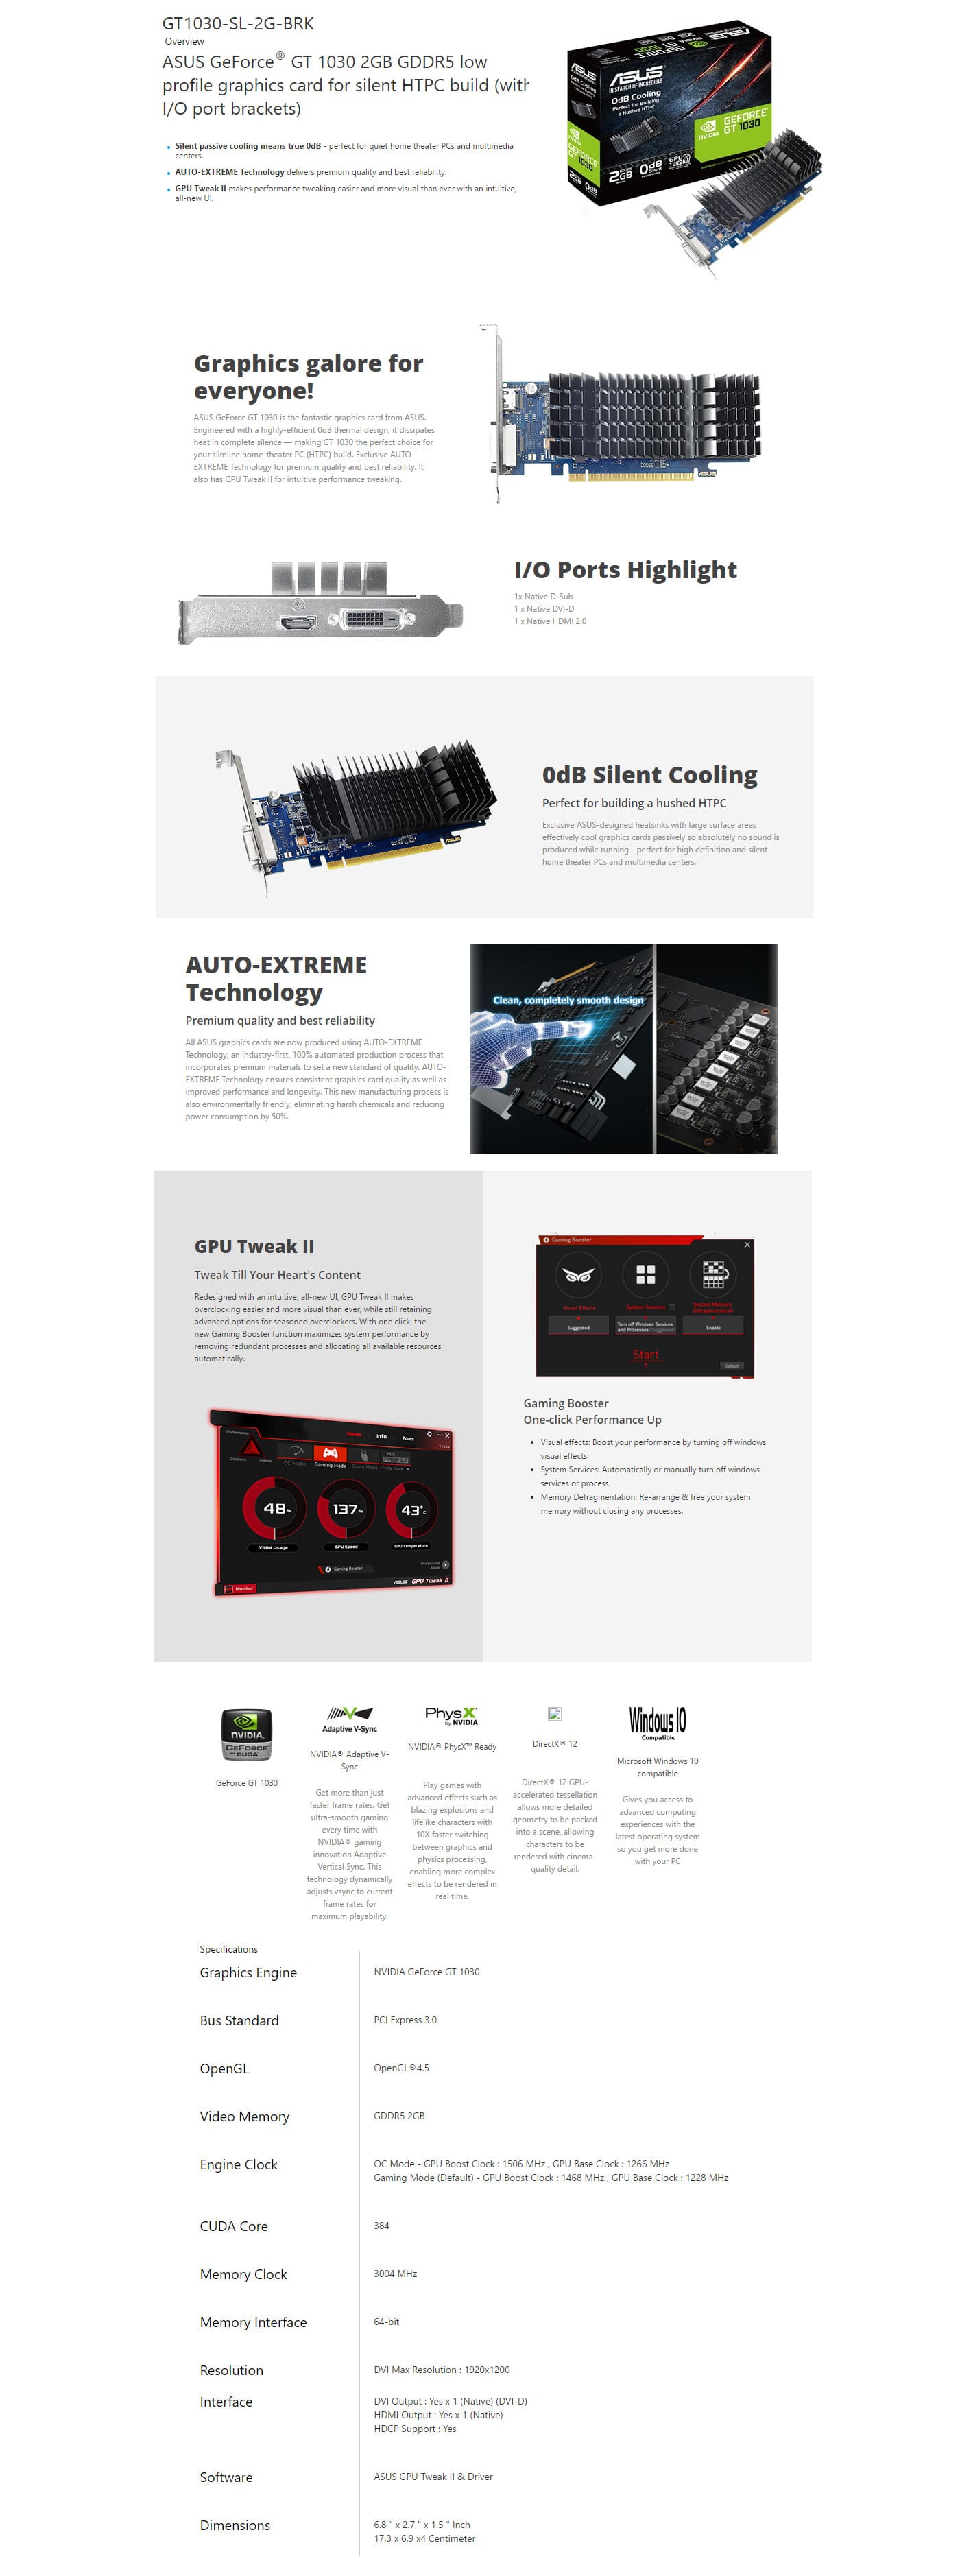 Asus Geforce GT 1030 2GB GDDR5 Graphic Card